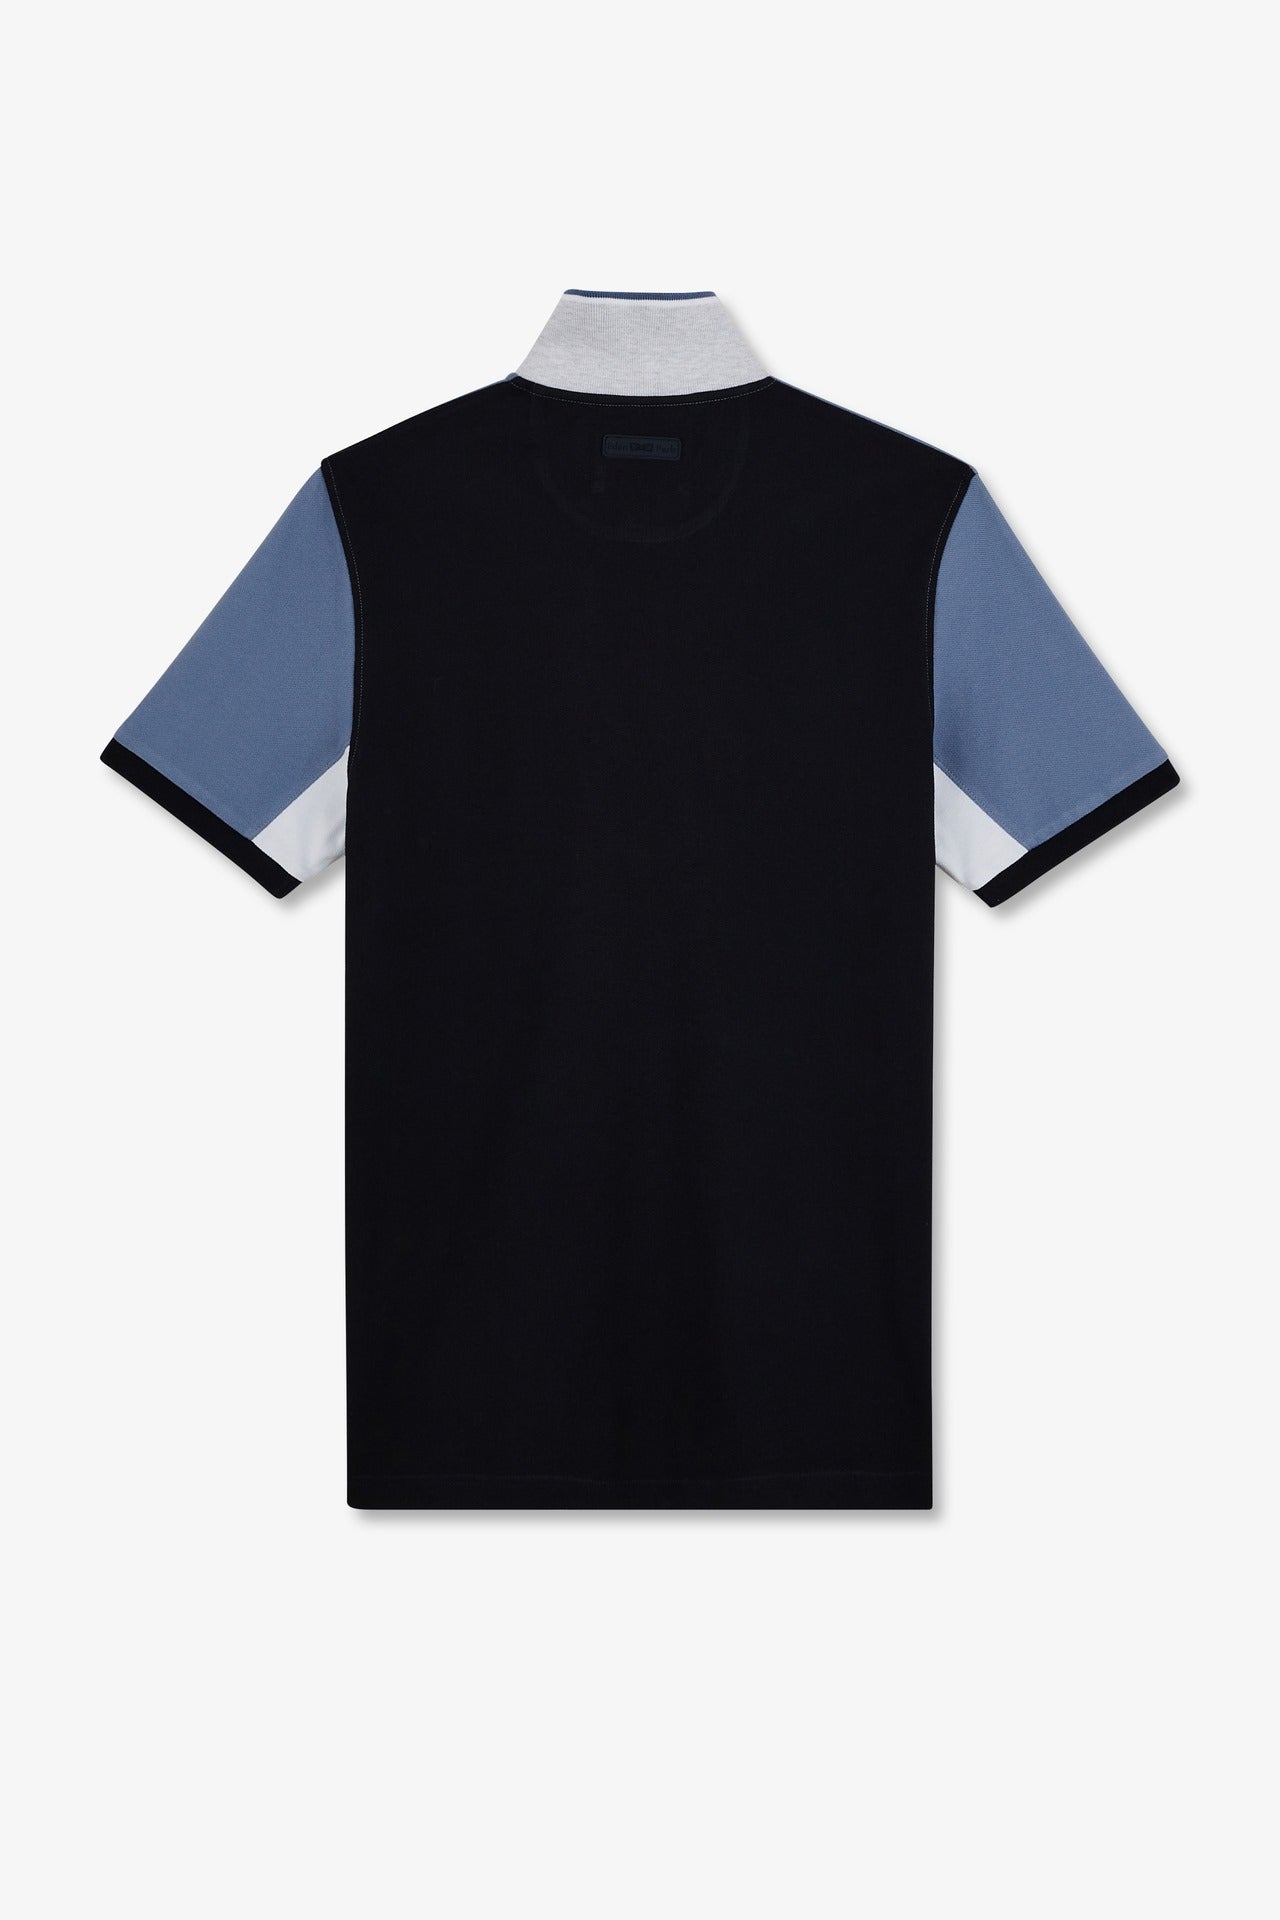 Short-sleeved blue colour-block polo shirt